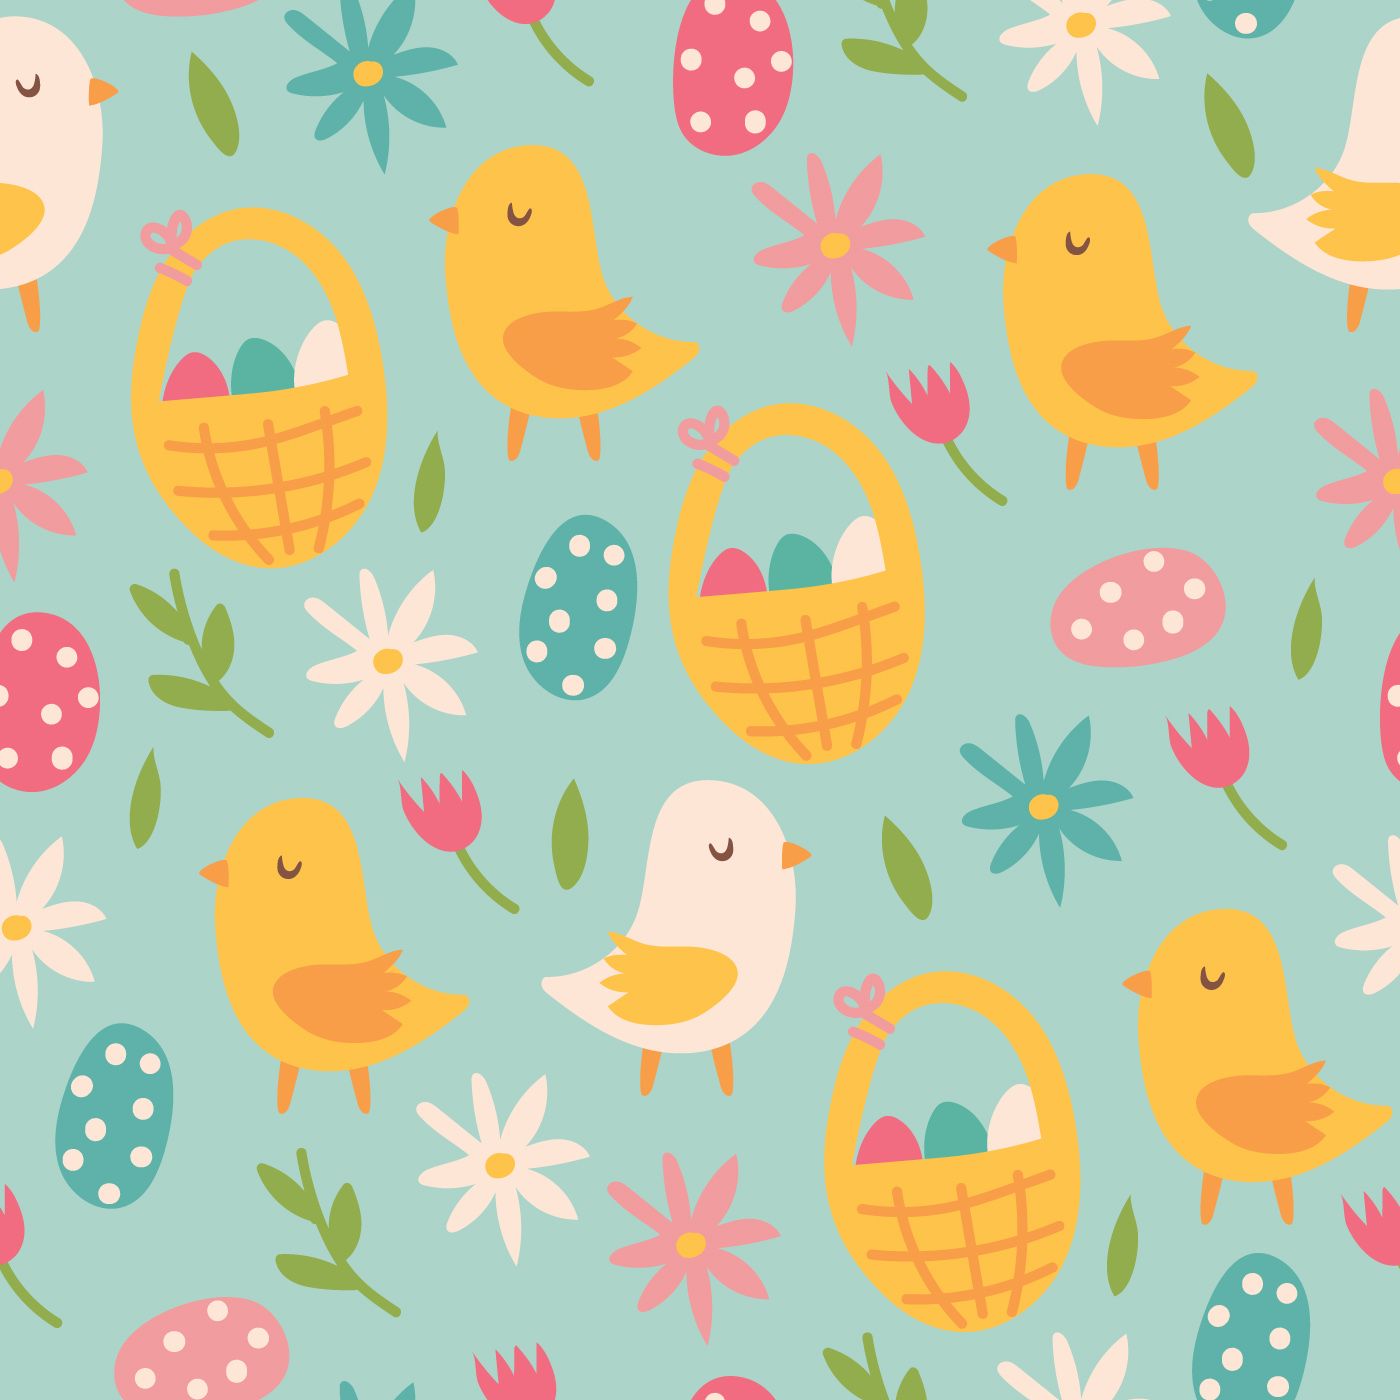 Cute Easter Wallpaper Pattern Free Vectors, Clipart Graphics & Vector Art